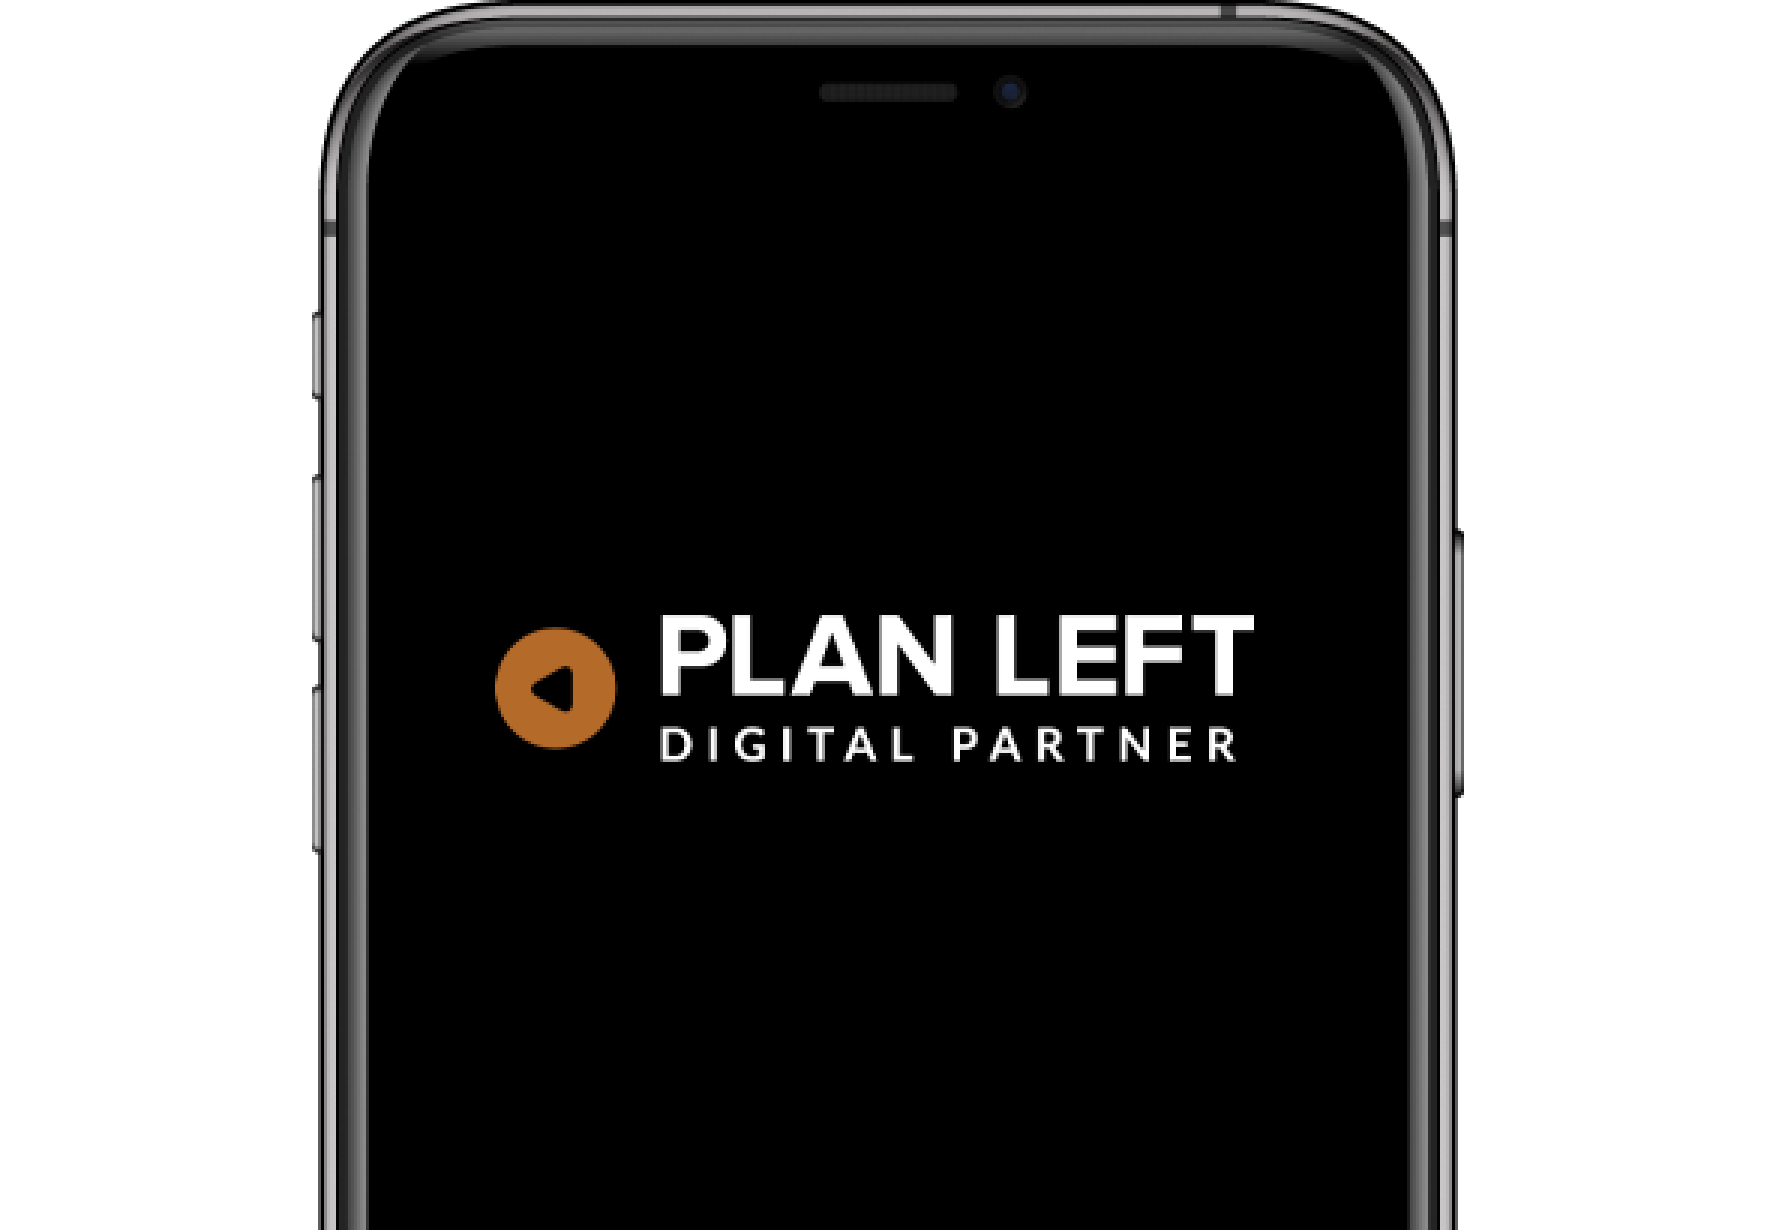 plan left logo on cell phone